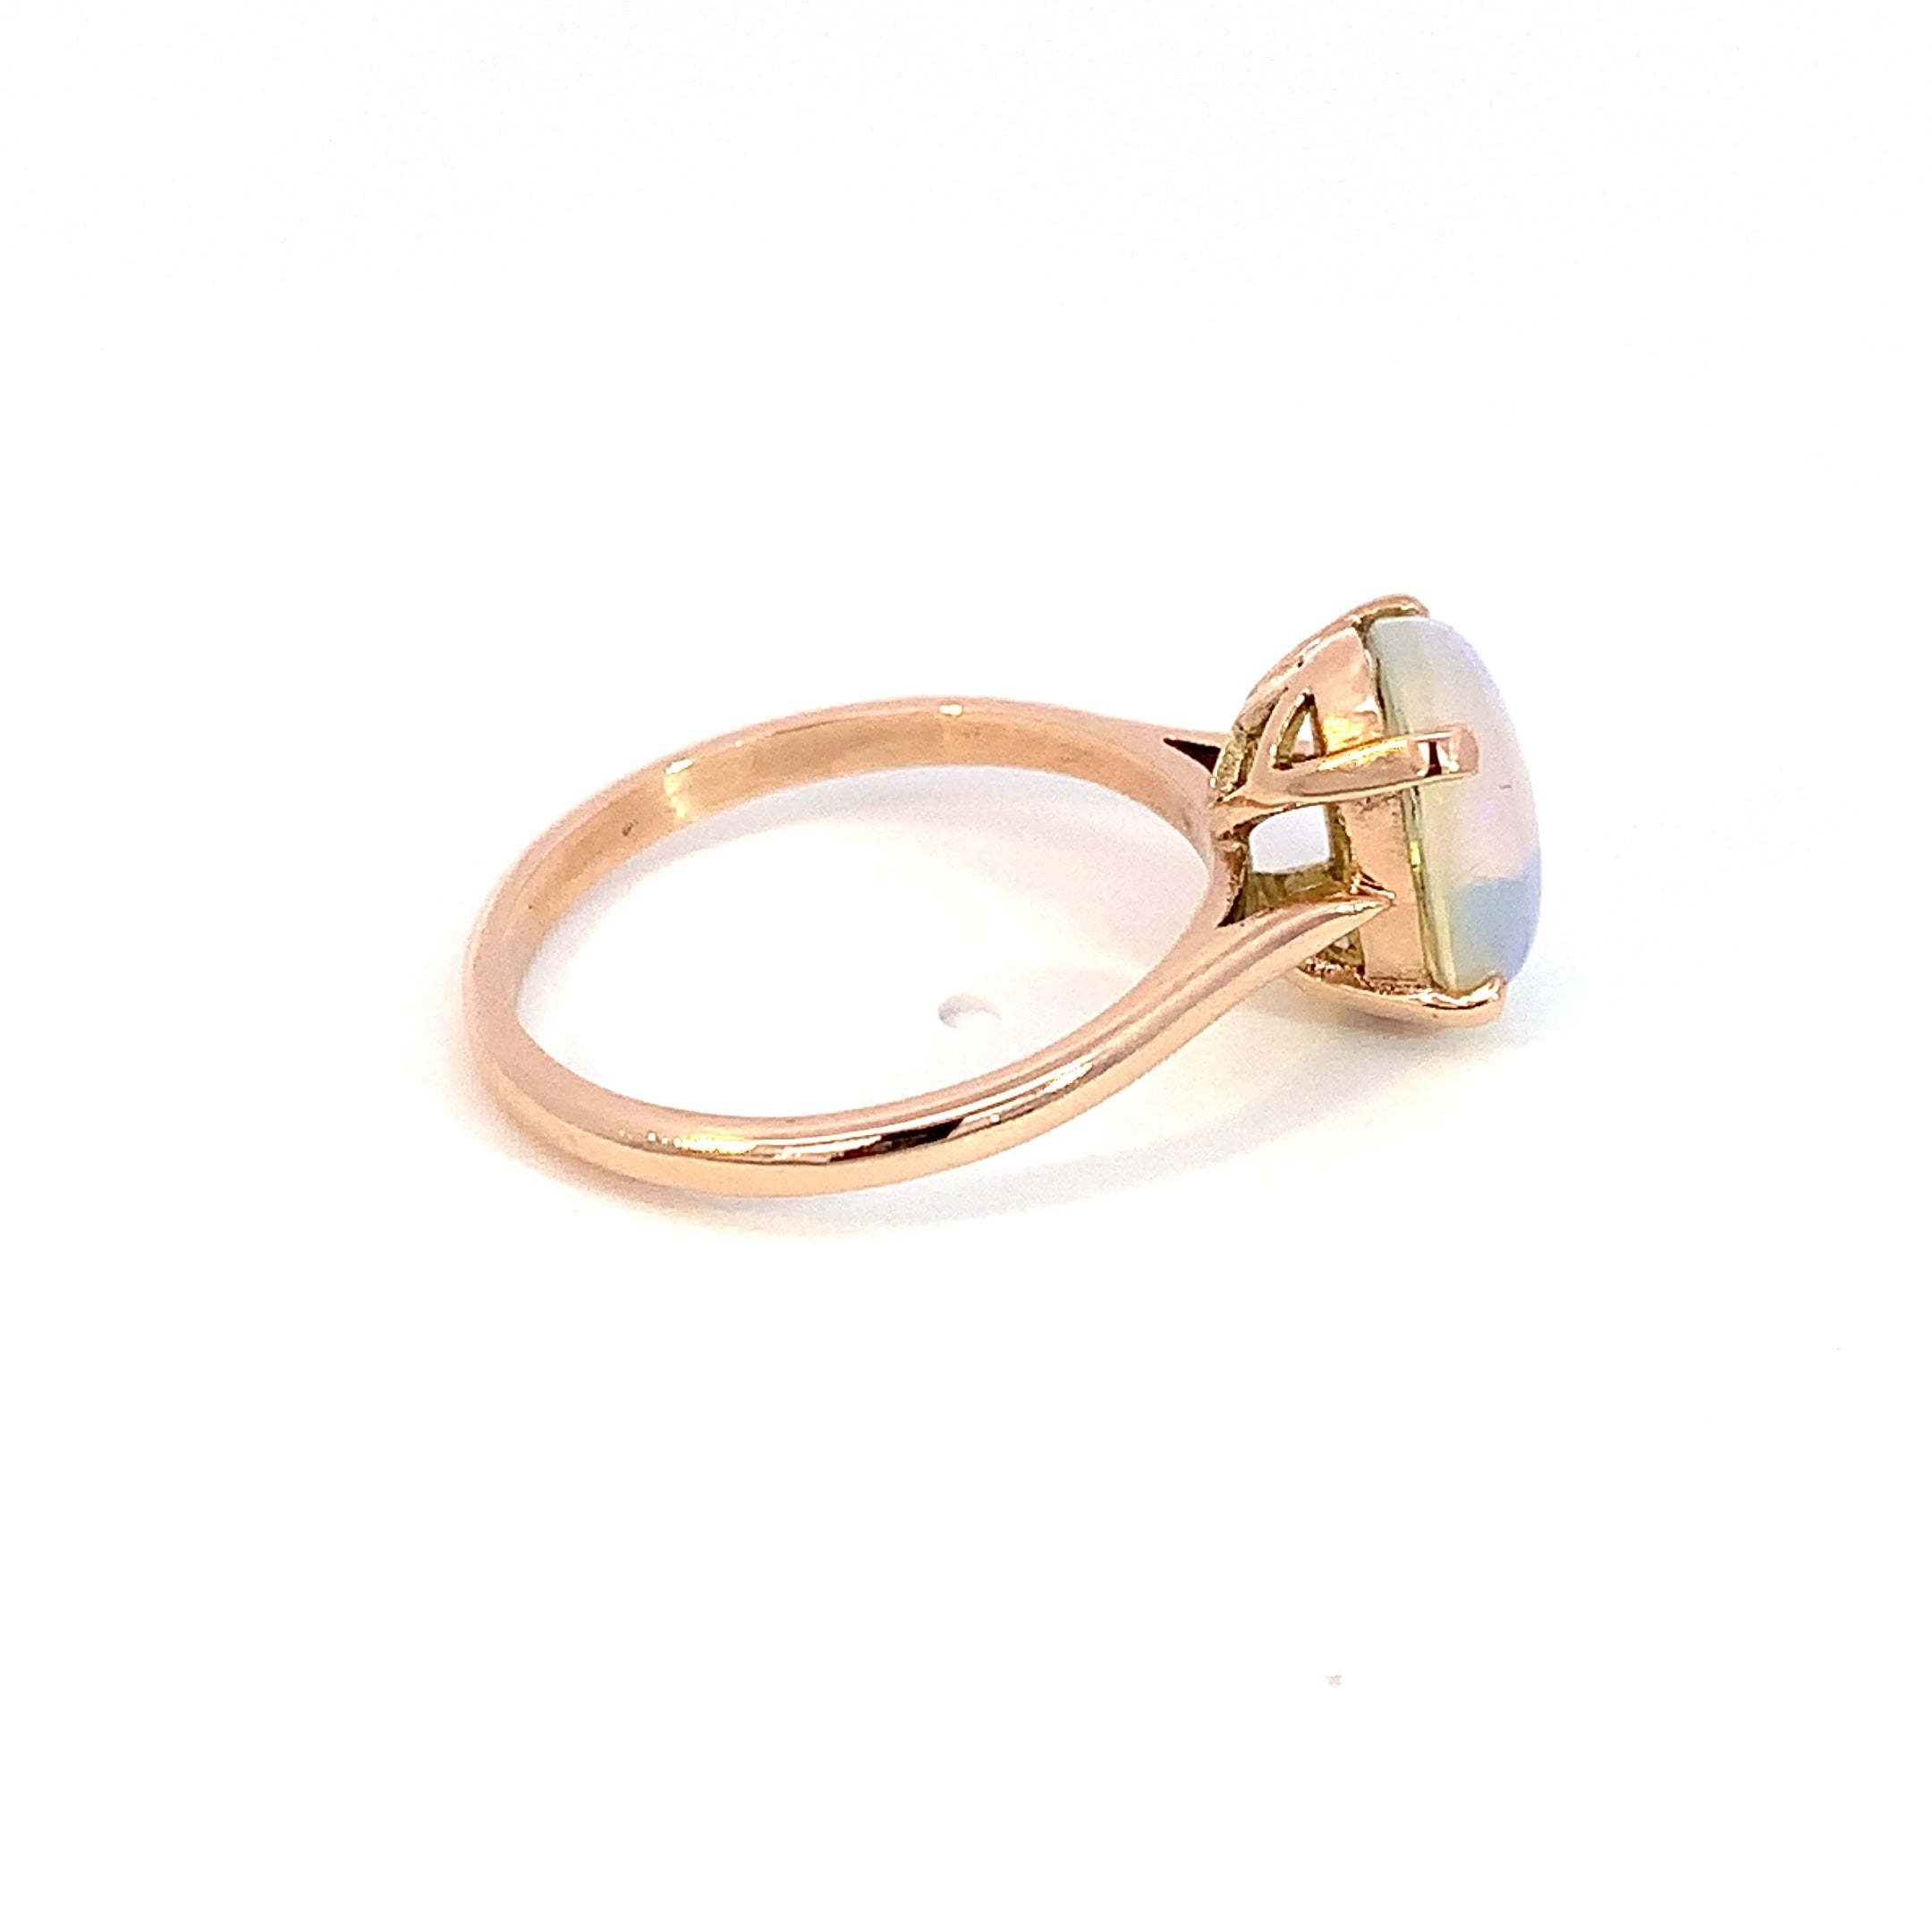 9kt Rose Gold Light Opal 1.64ct solitaire ring - Masterpiece Jewellery Opal & Gems Sydney Australia | Online Shop